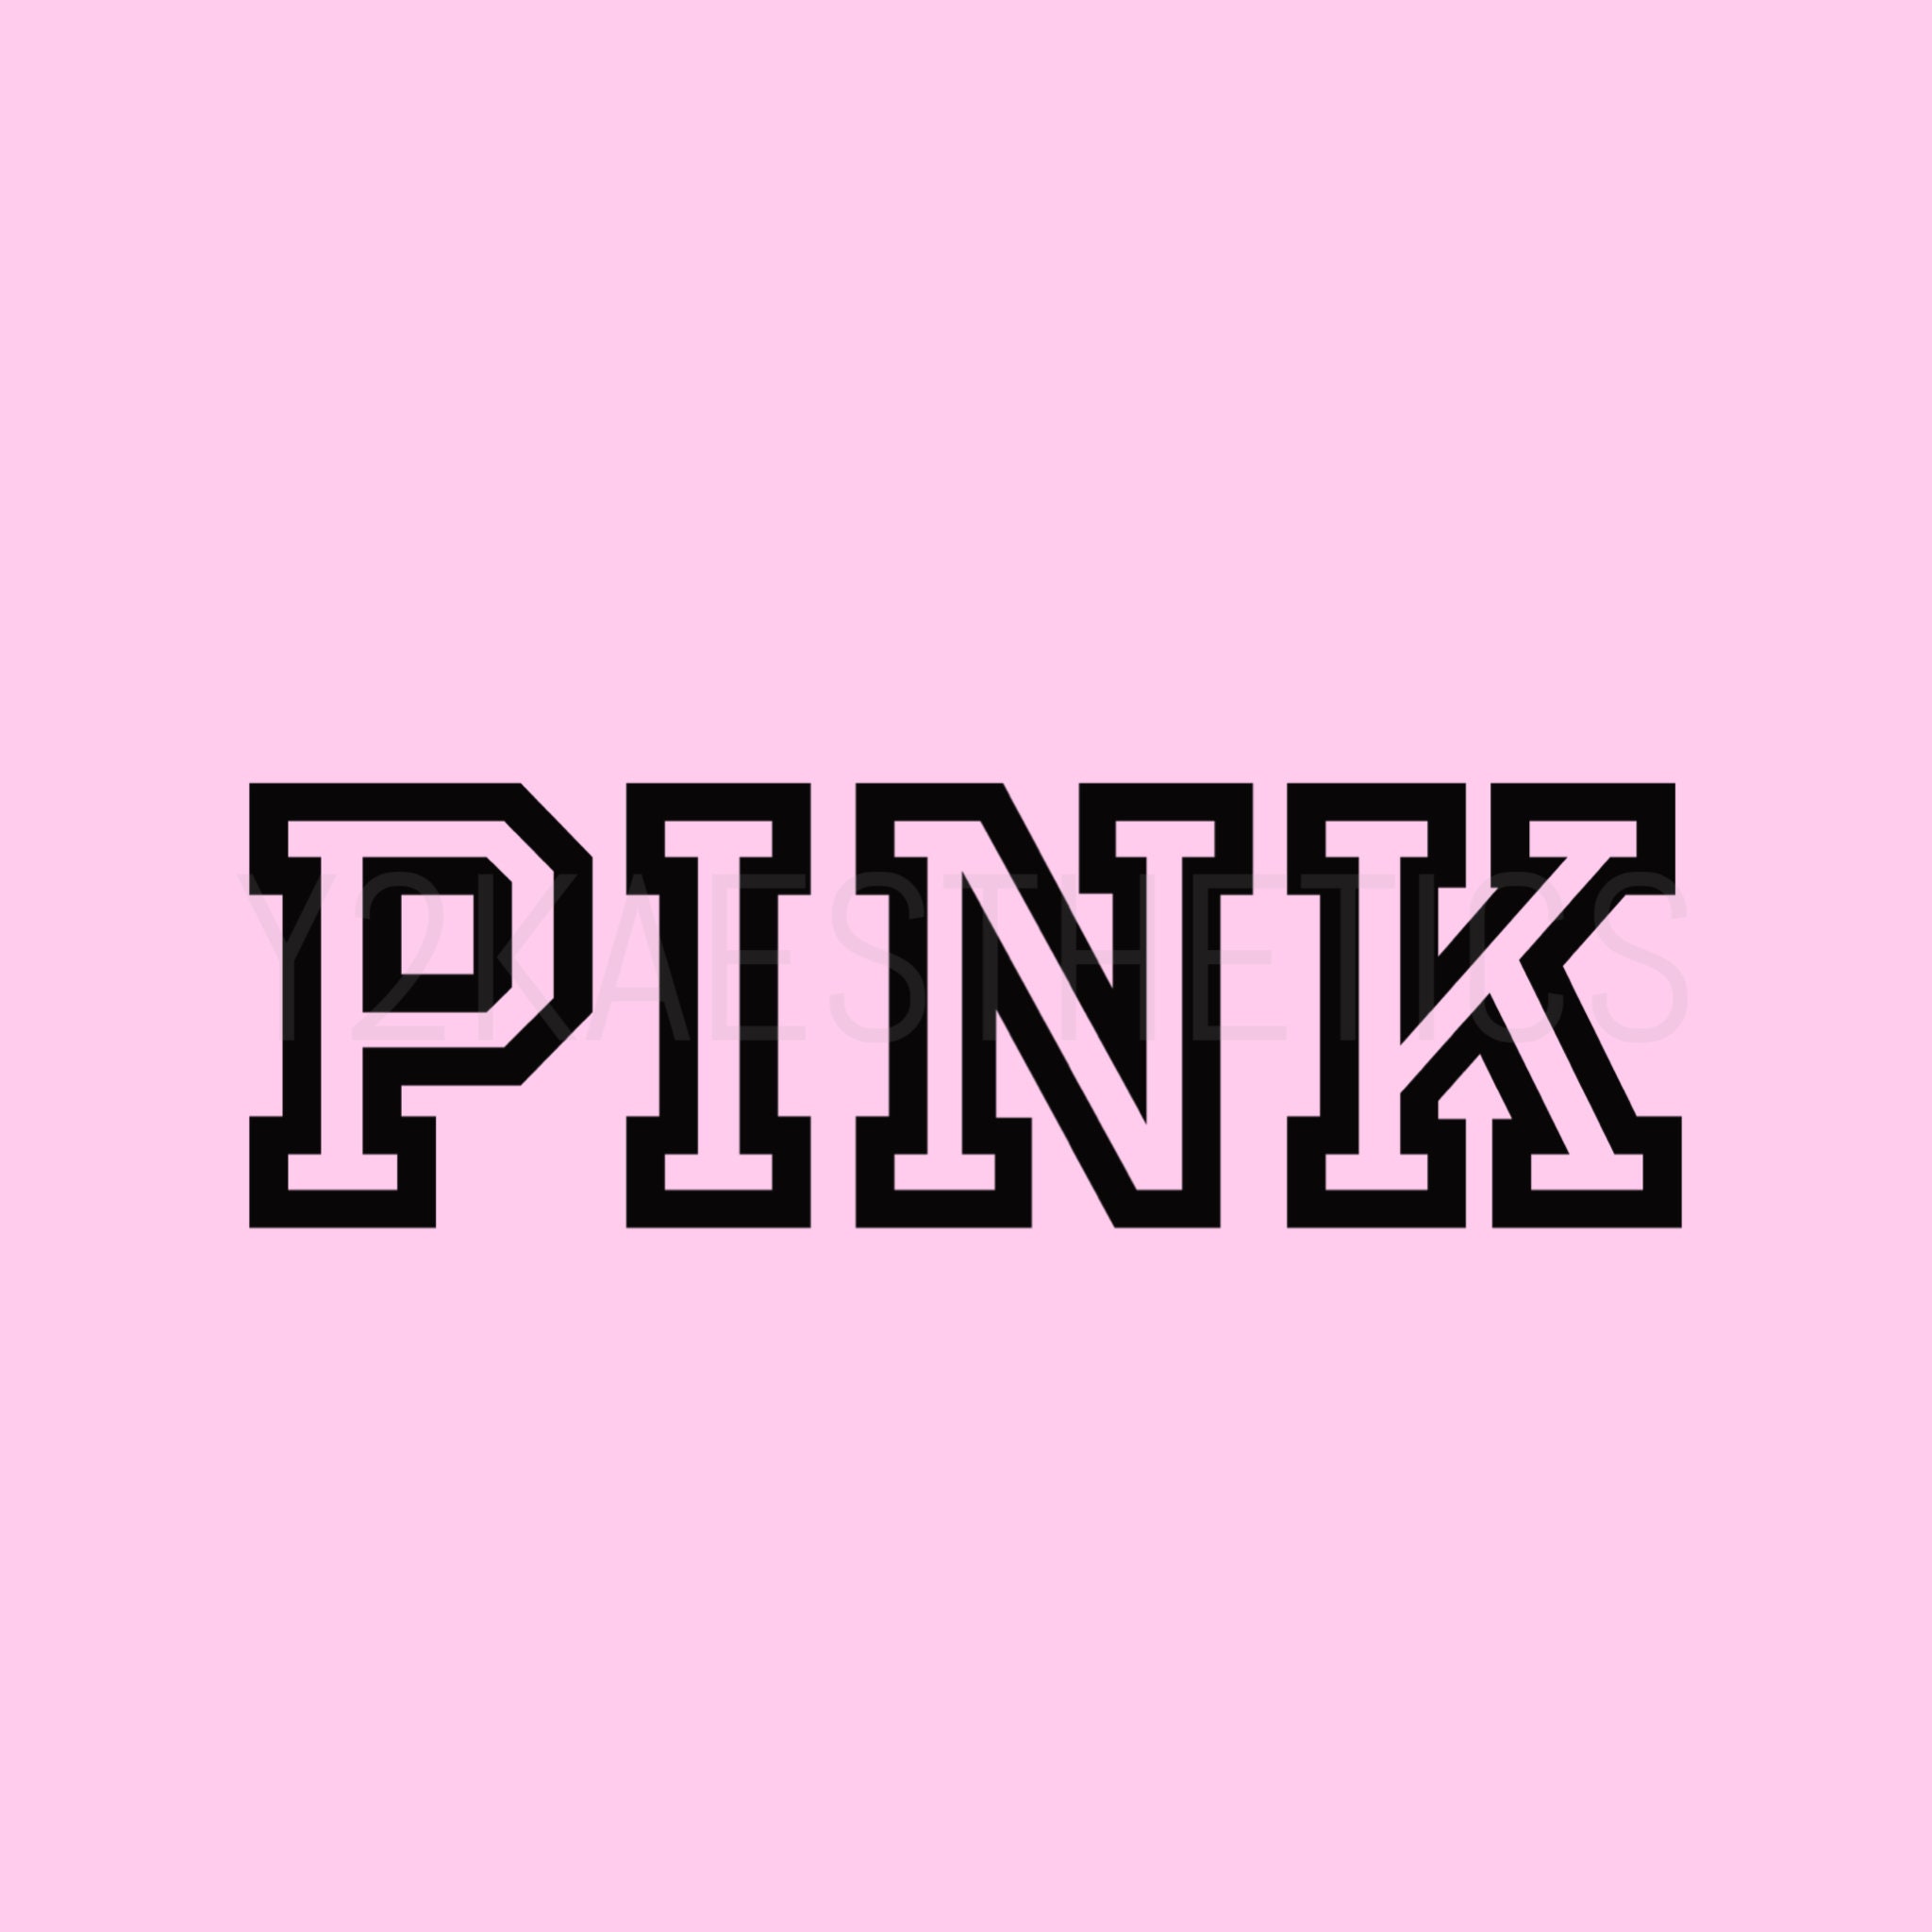 Pink Victoria Secret Sweatshirt Etsy